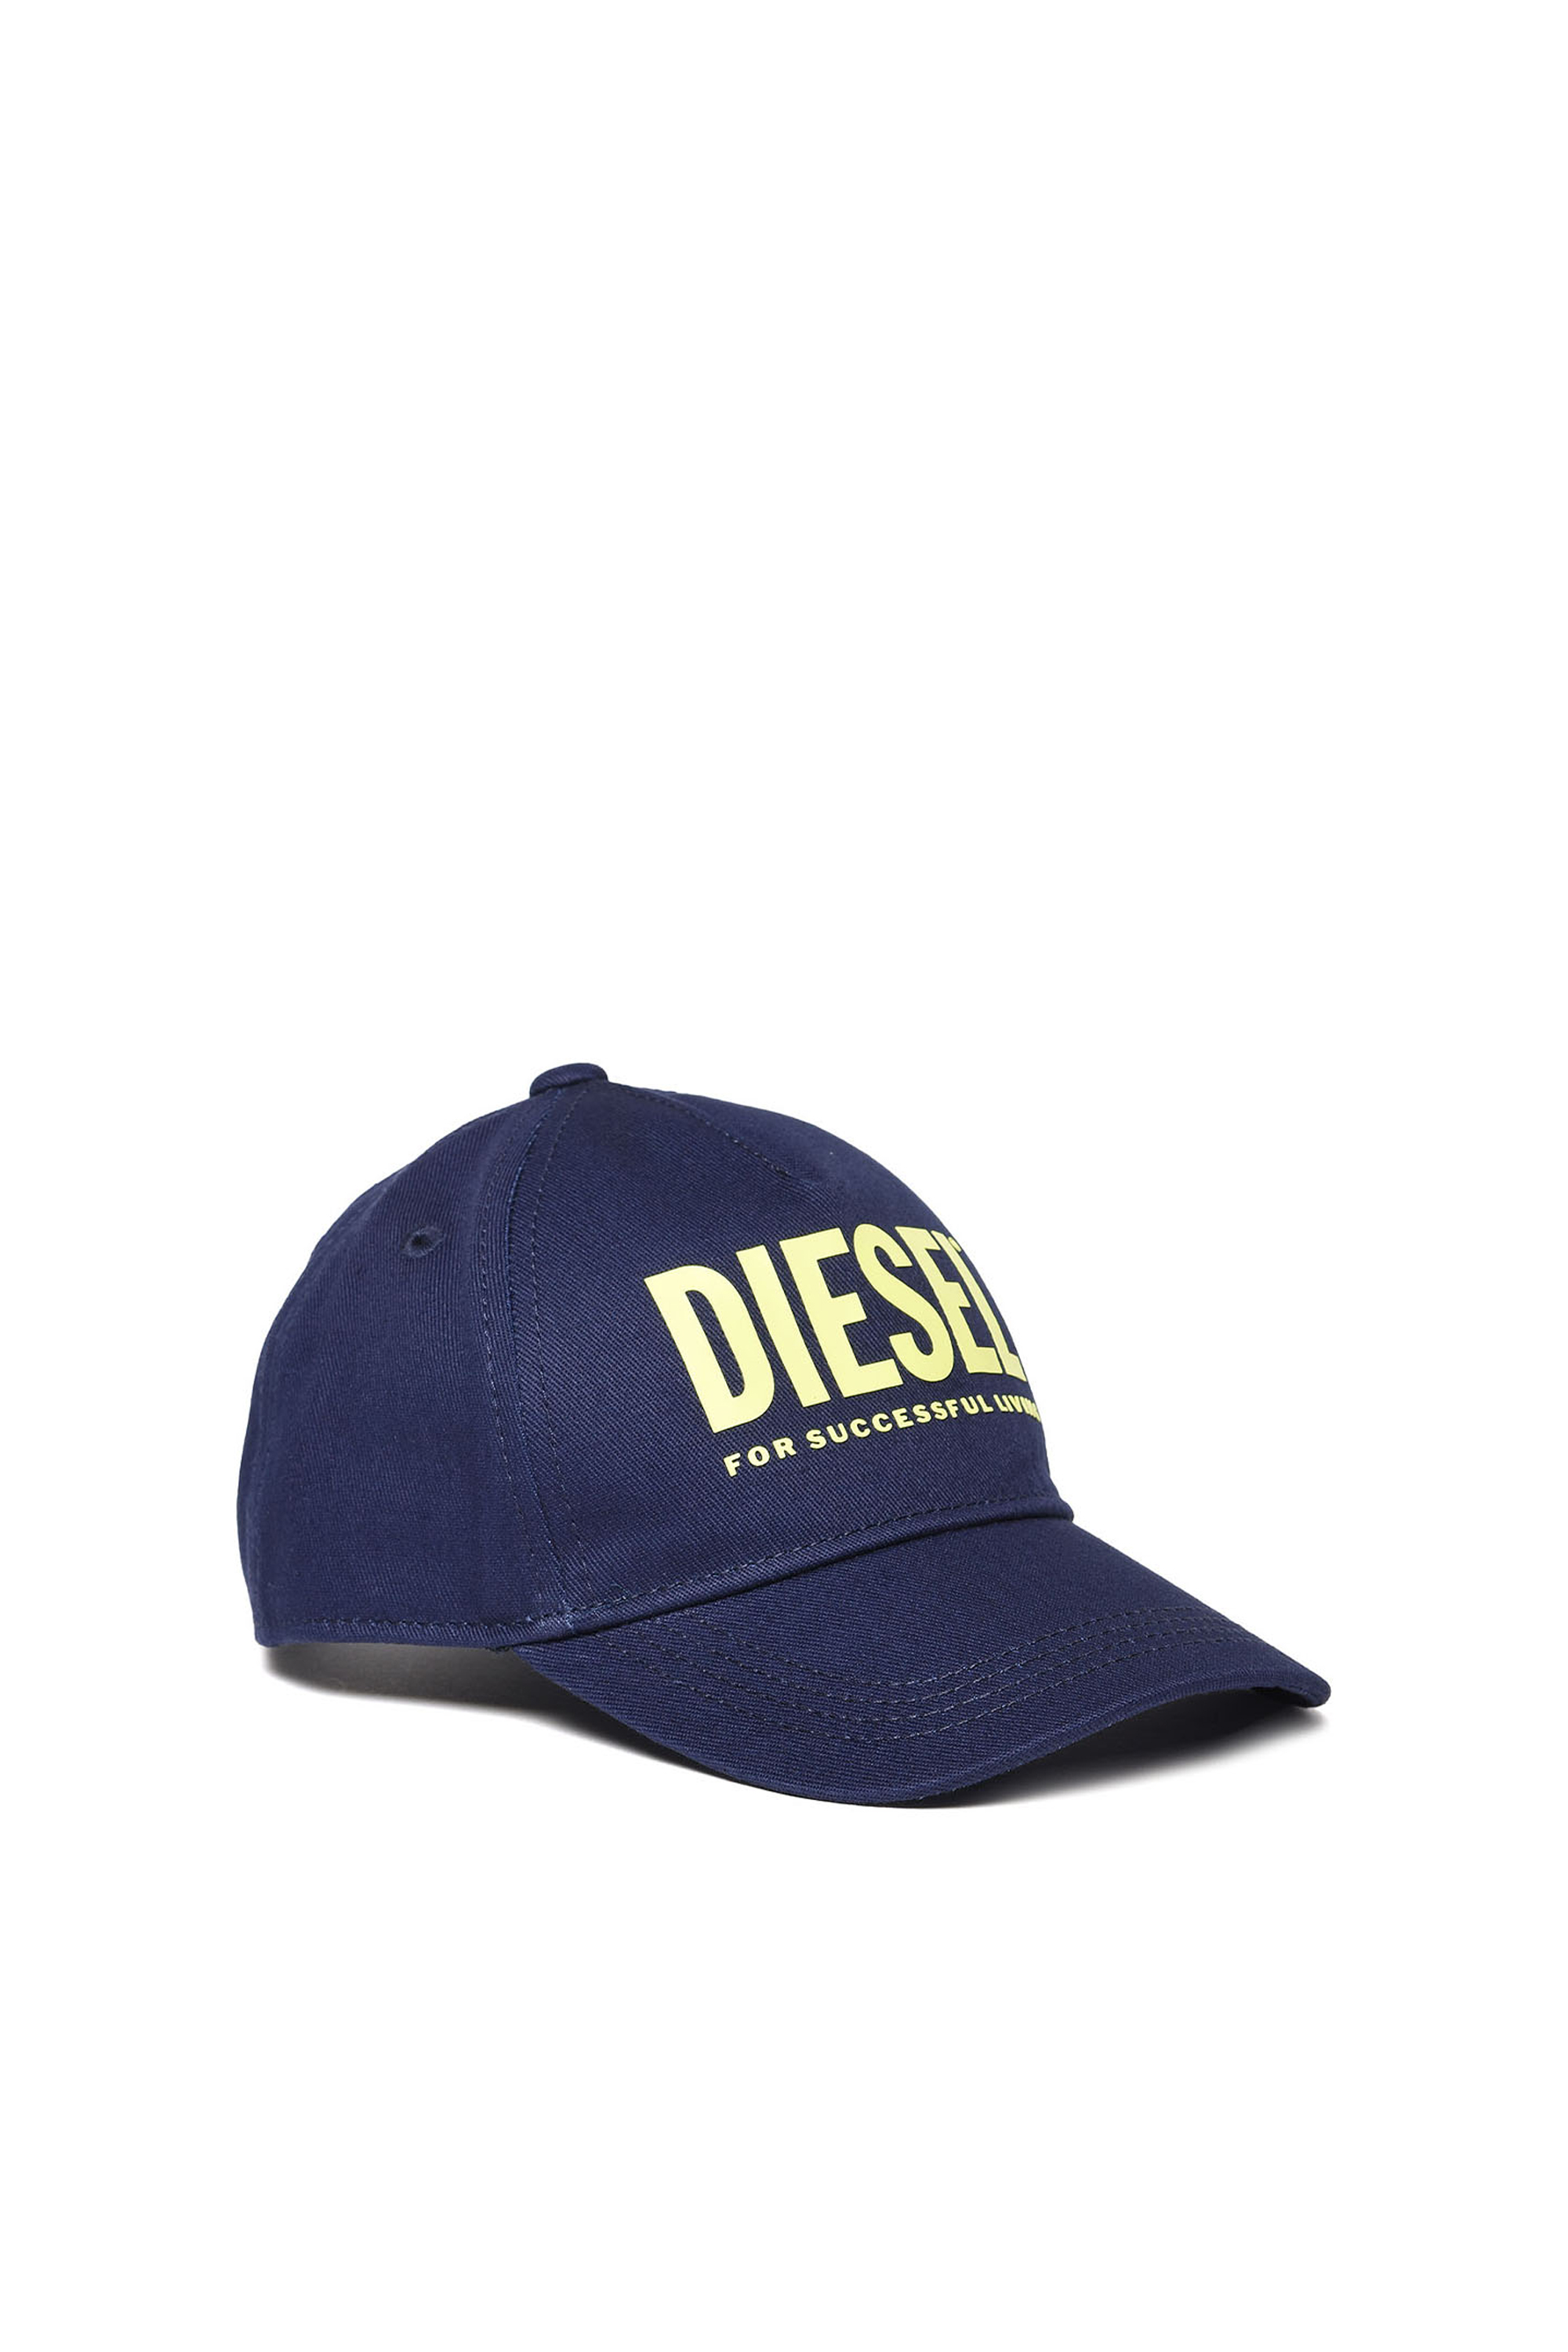 Diesel - FTOLLYB, Dark Blue - Image 1